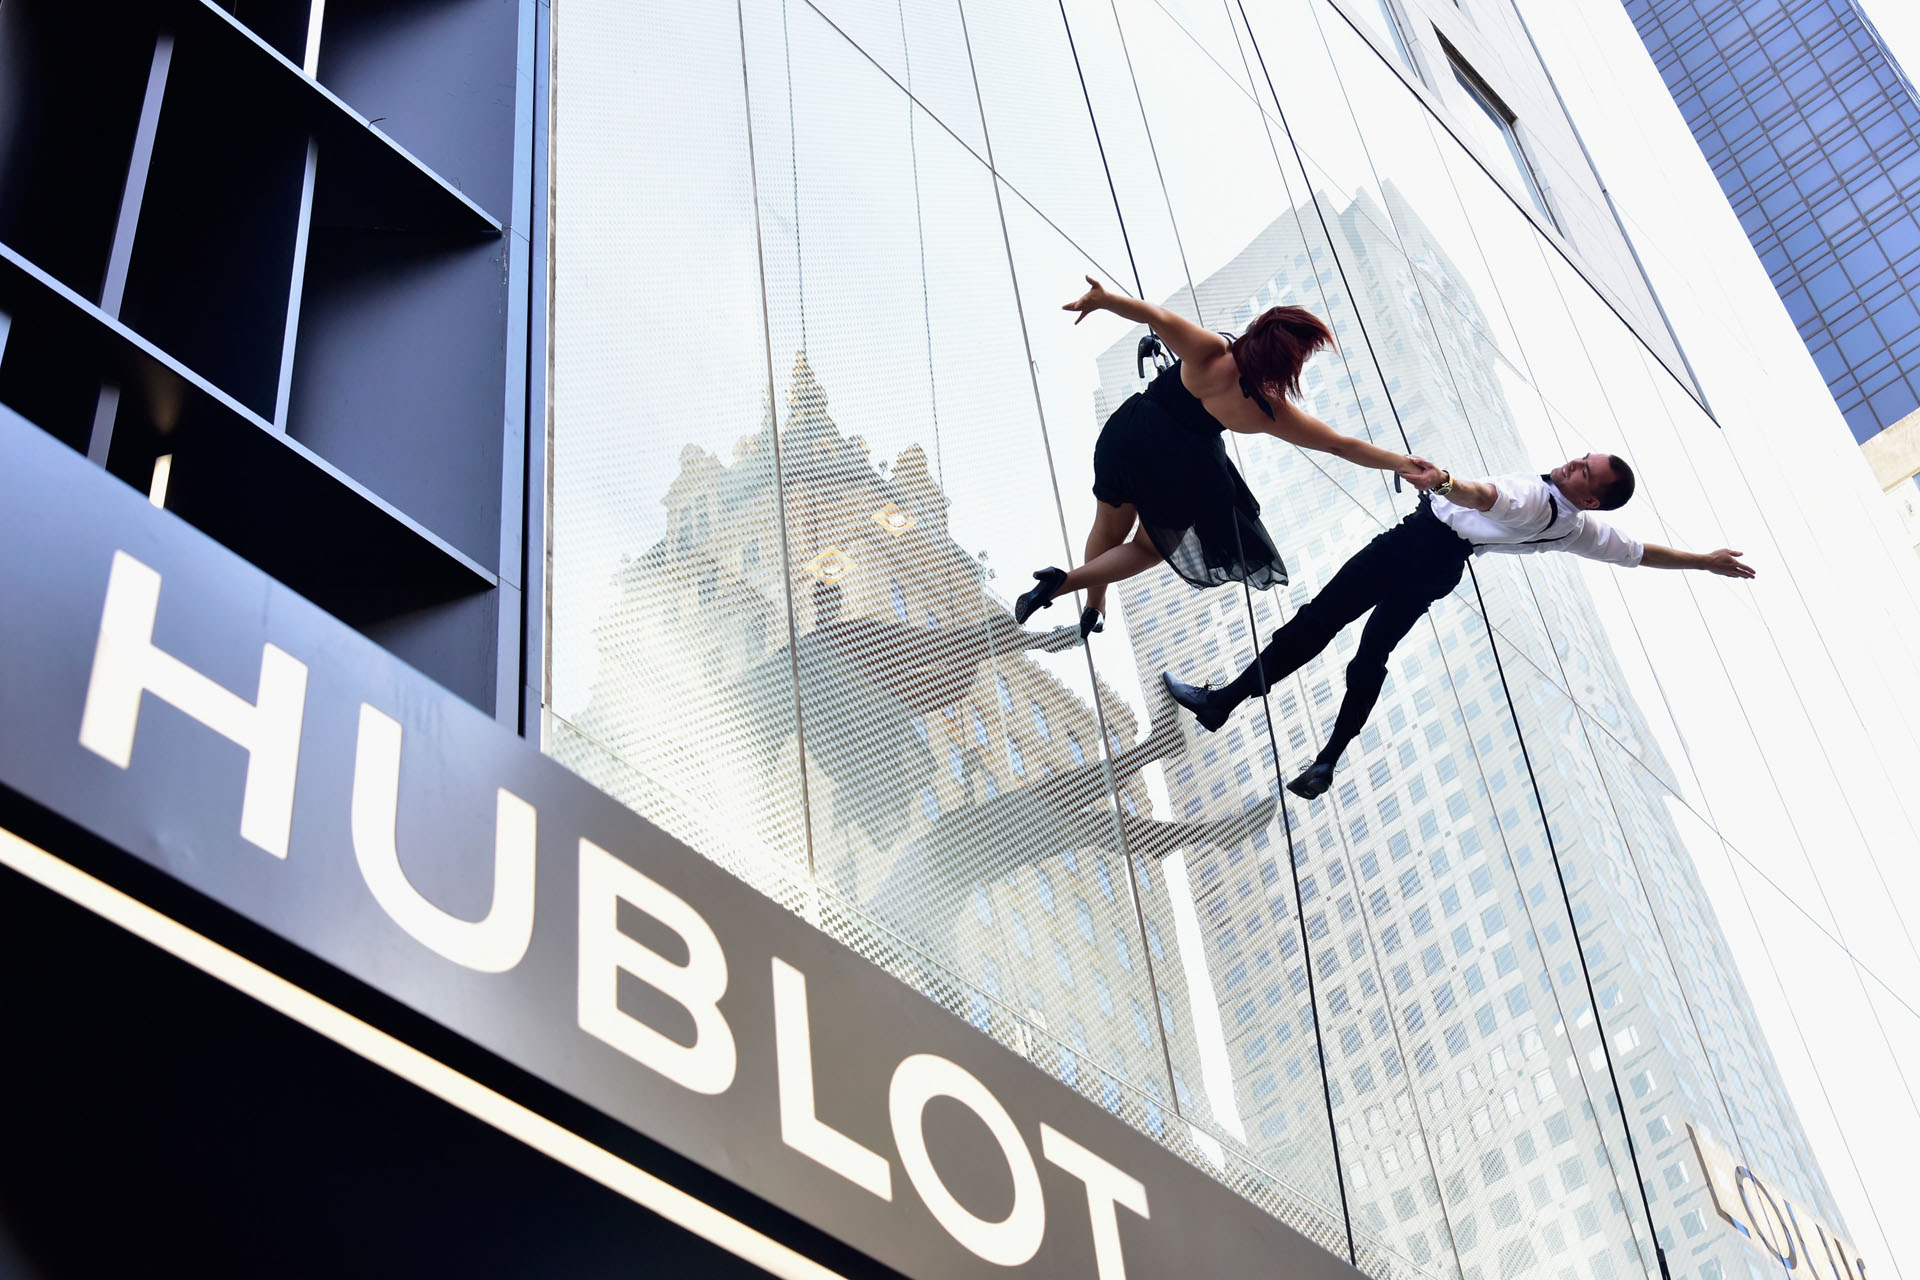 Dancers rappel down the facade of the Hublot Fifth Avenue Boutique